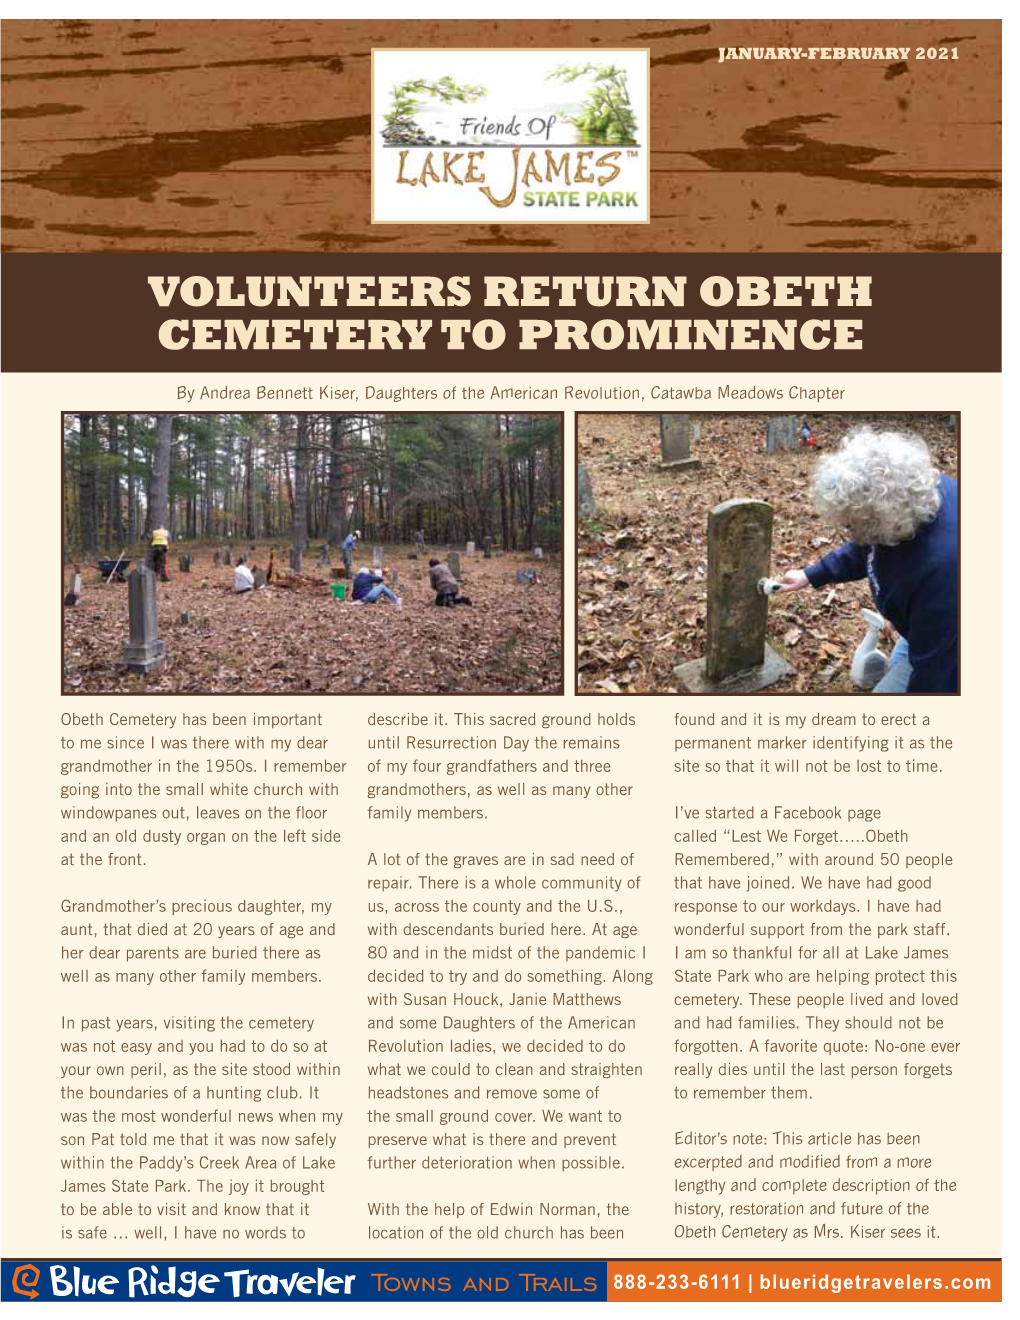 Volunteers Return Obeth Cemetery to Prominence